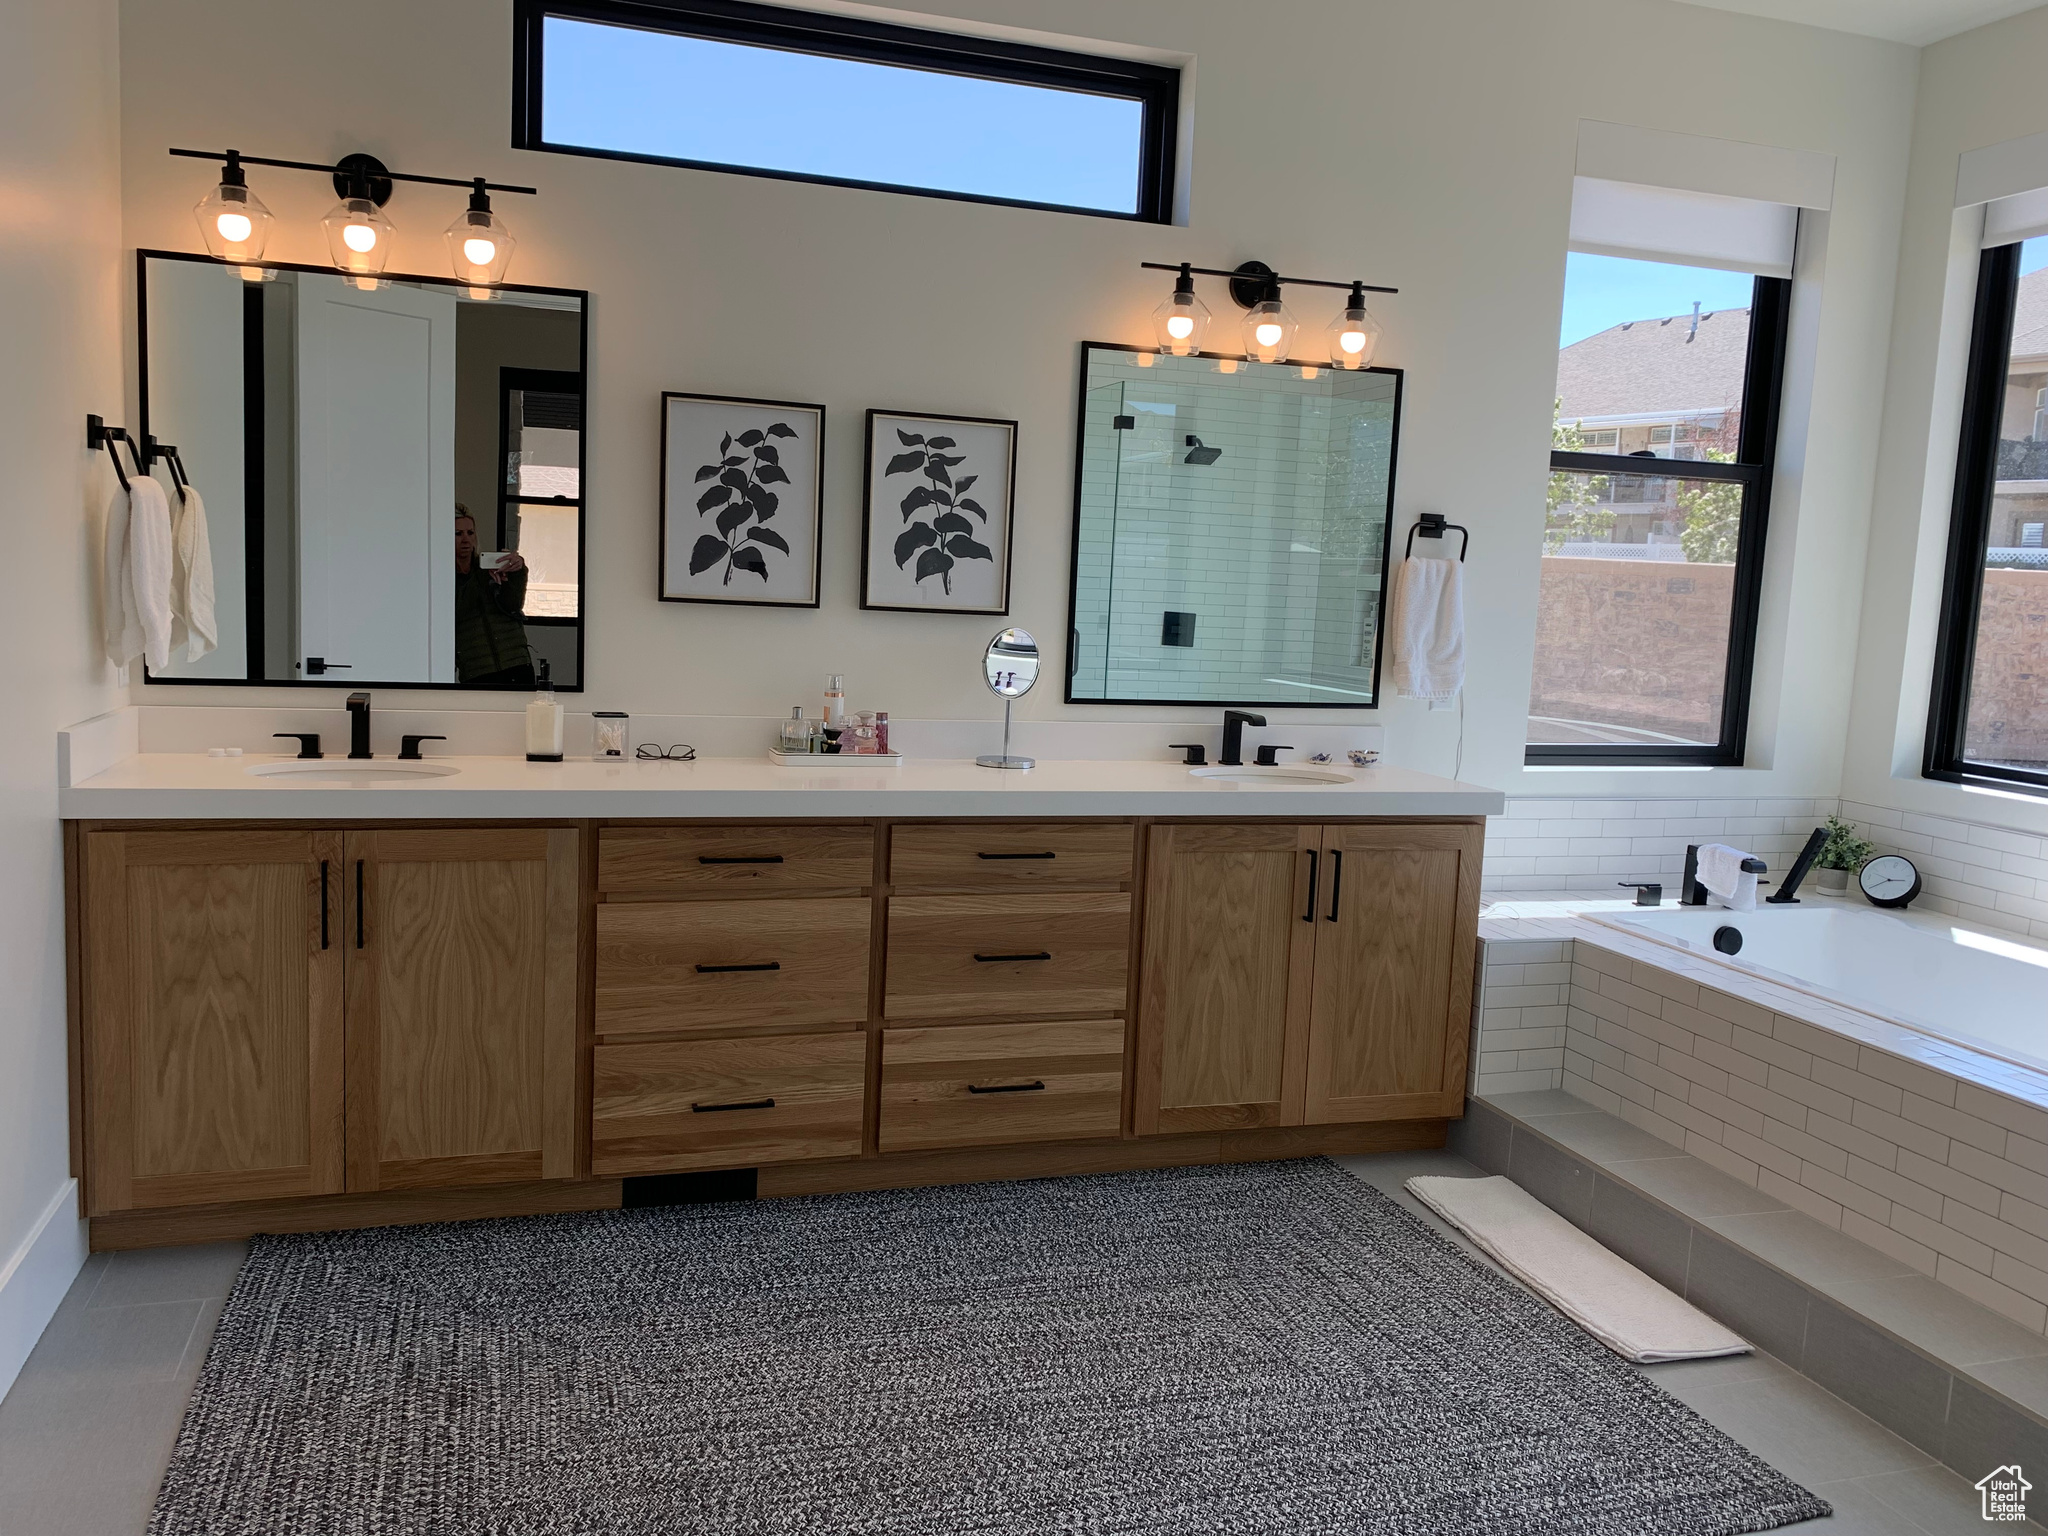 Bathroom with double vanity, tile floors, and tiled bath